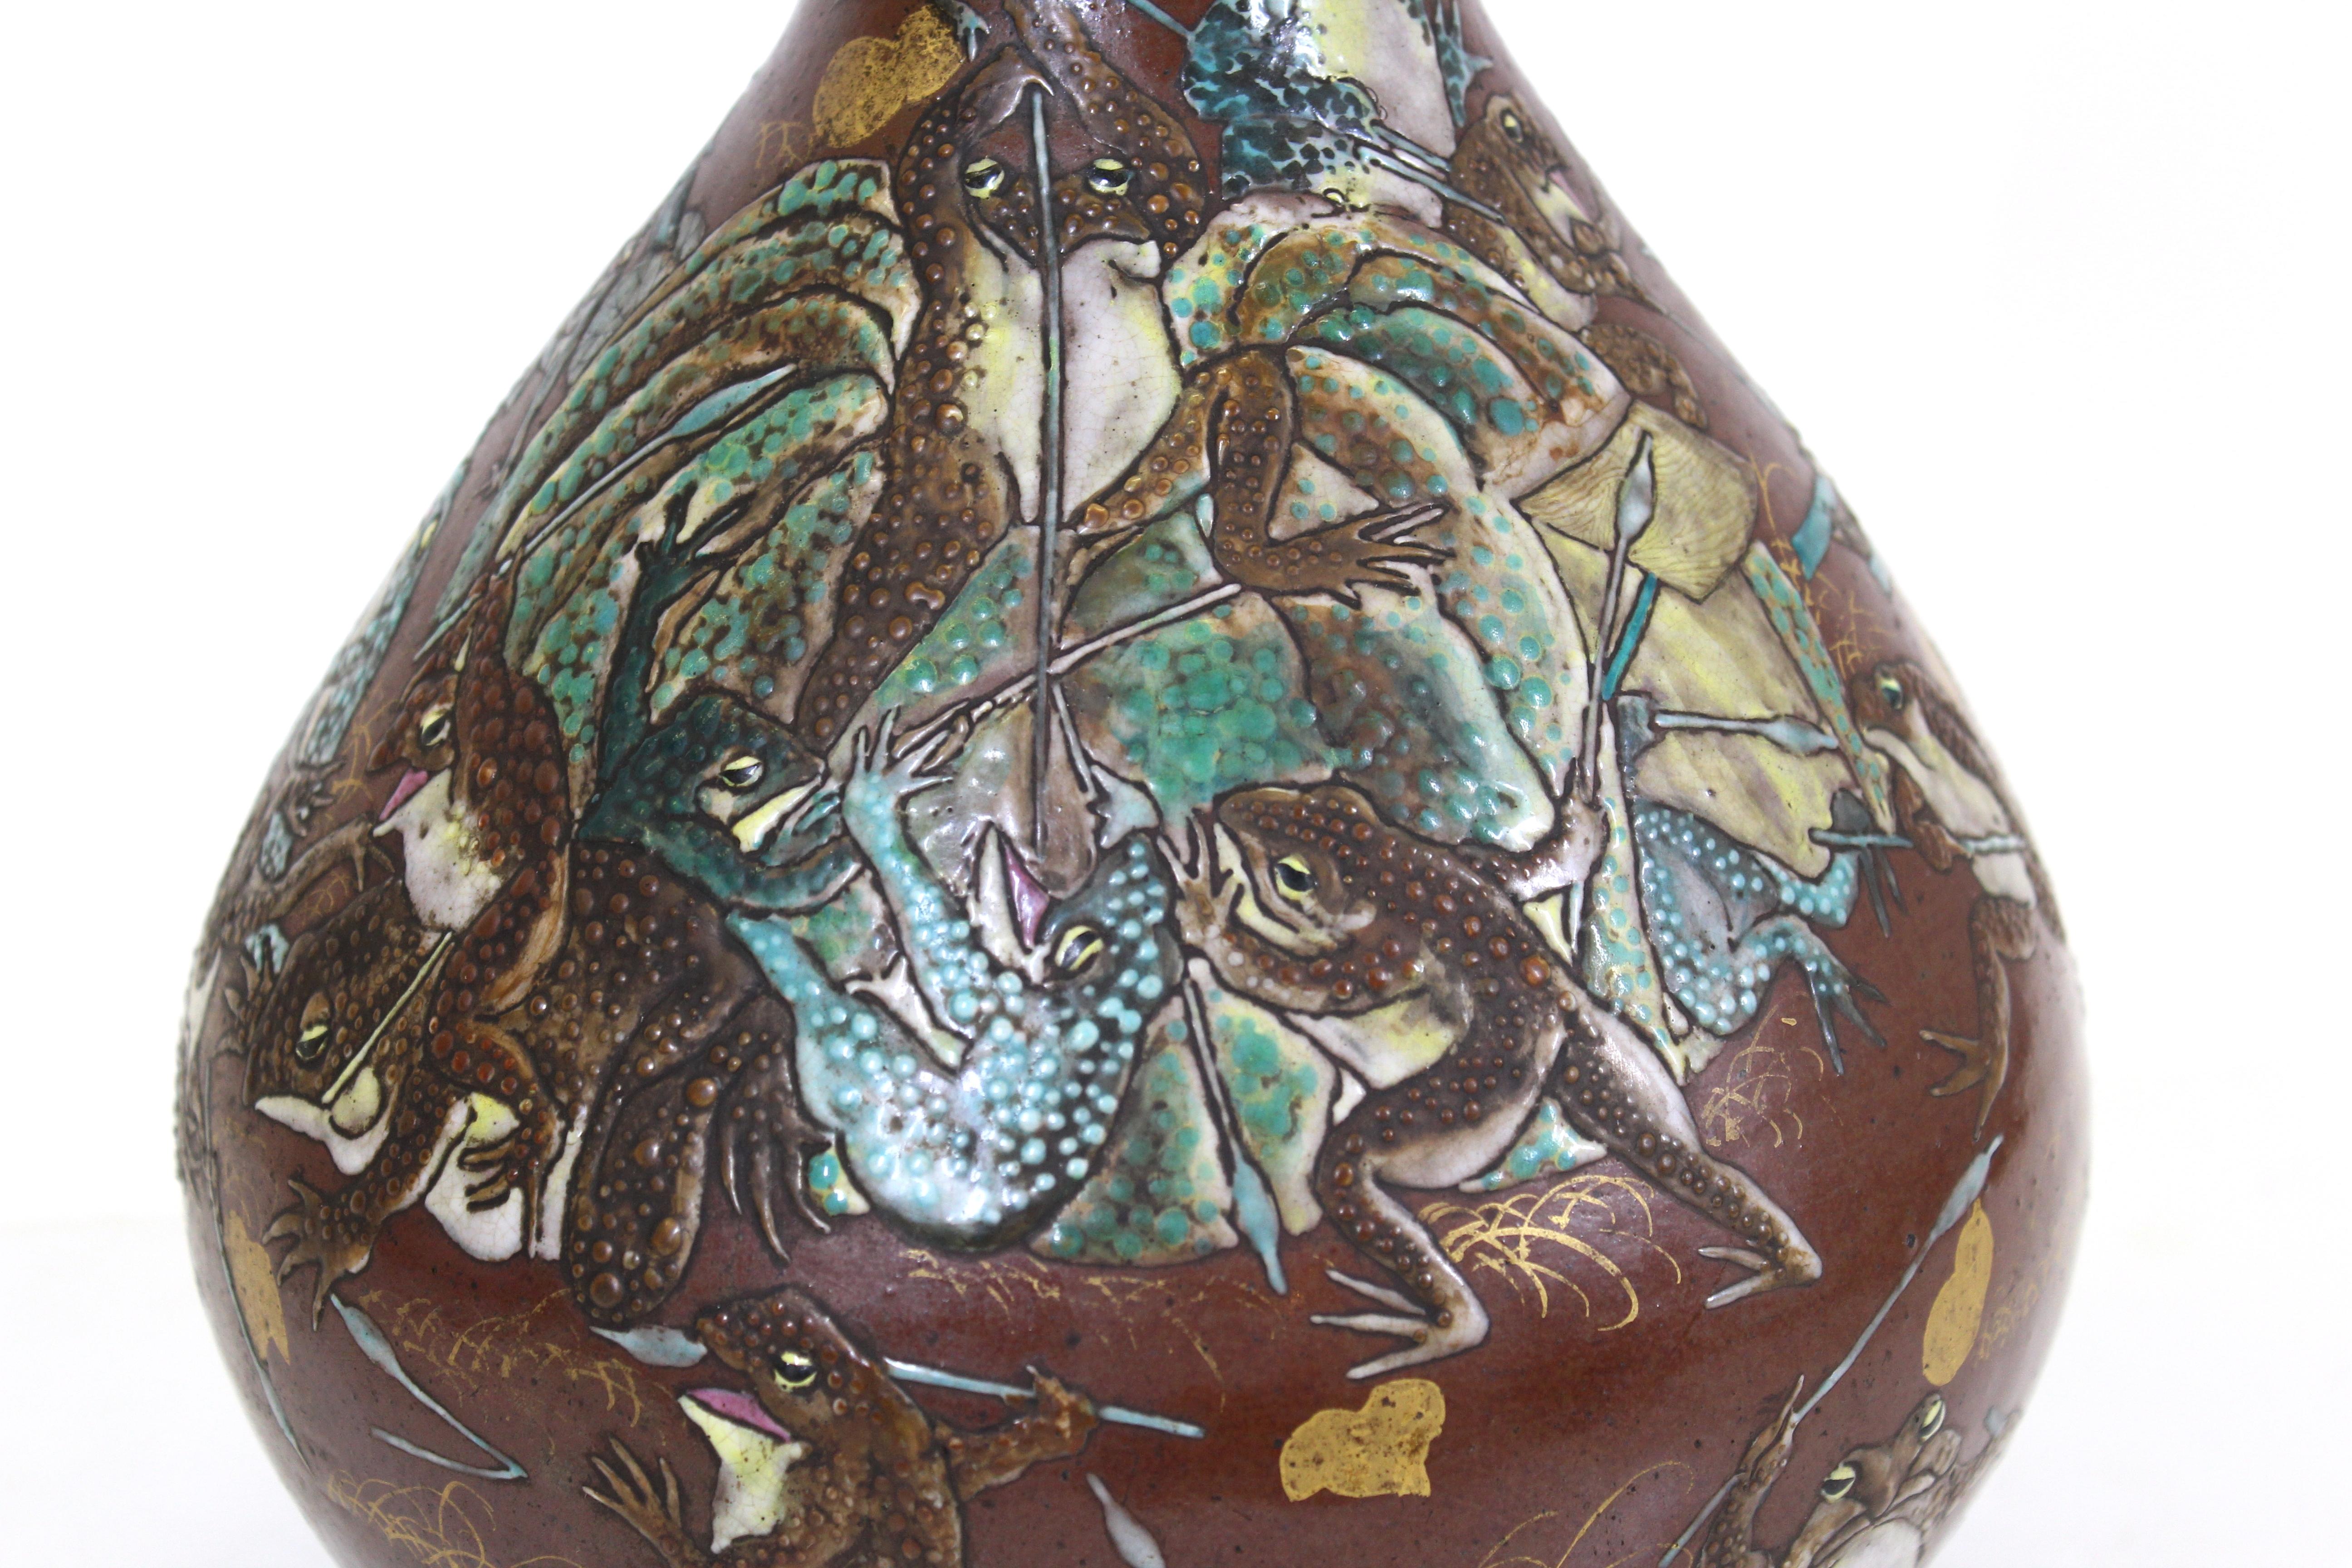 Ceramic Japanese Meiji Satsuma Vase with Frogs at War